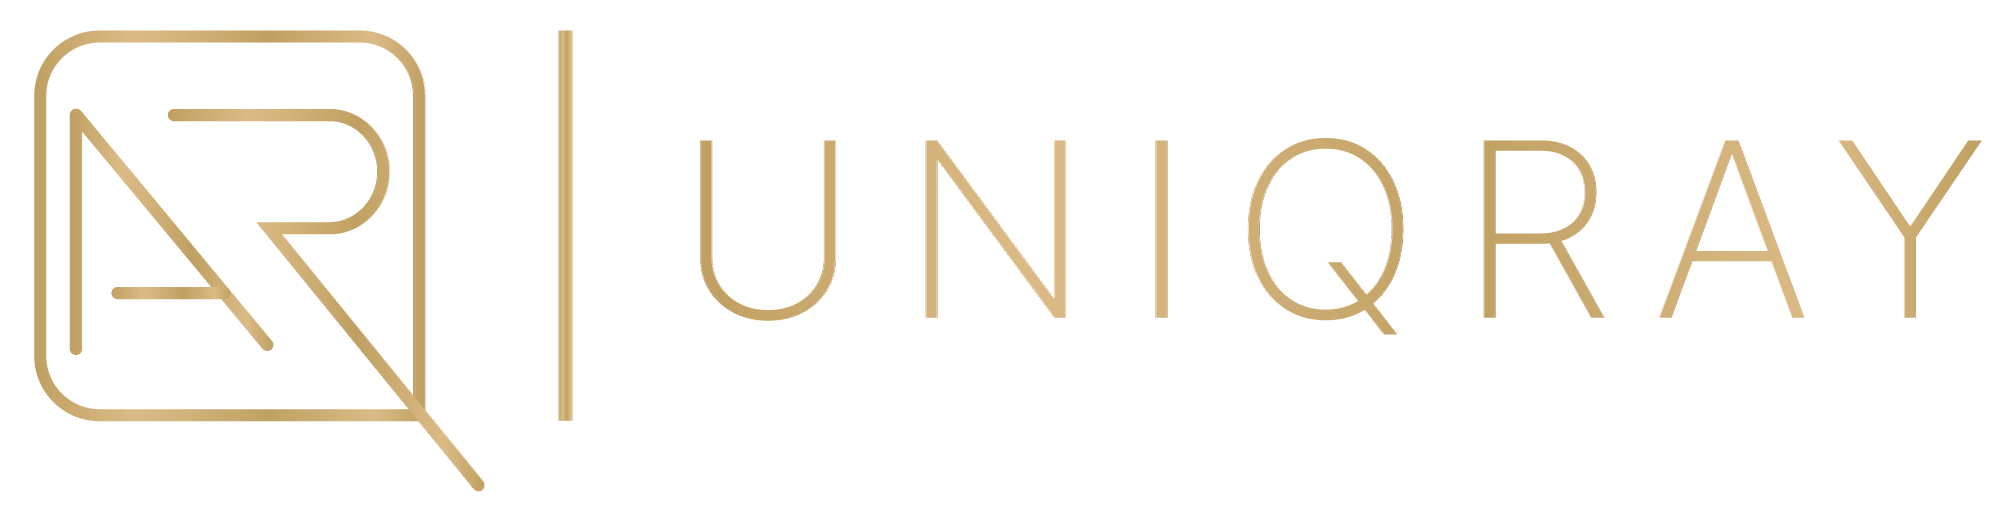 Uniqray logo